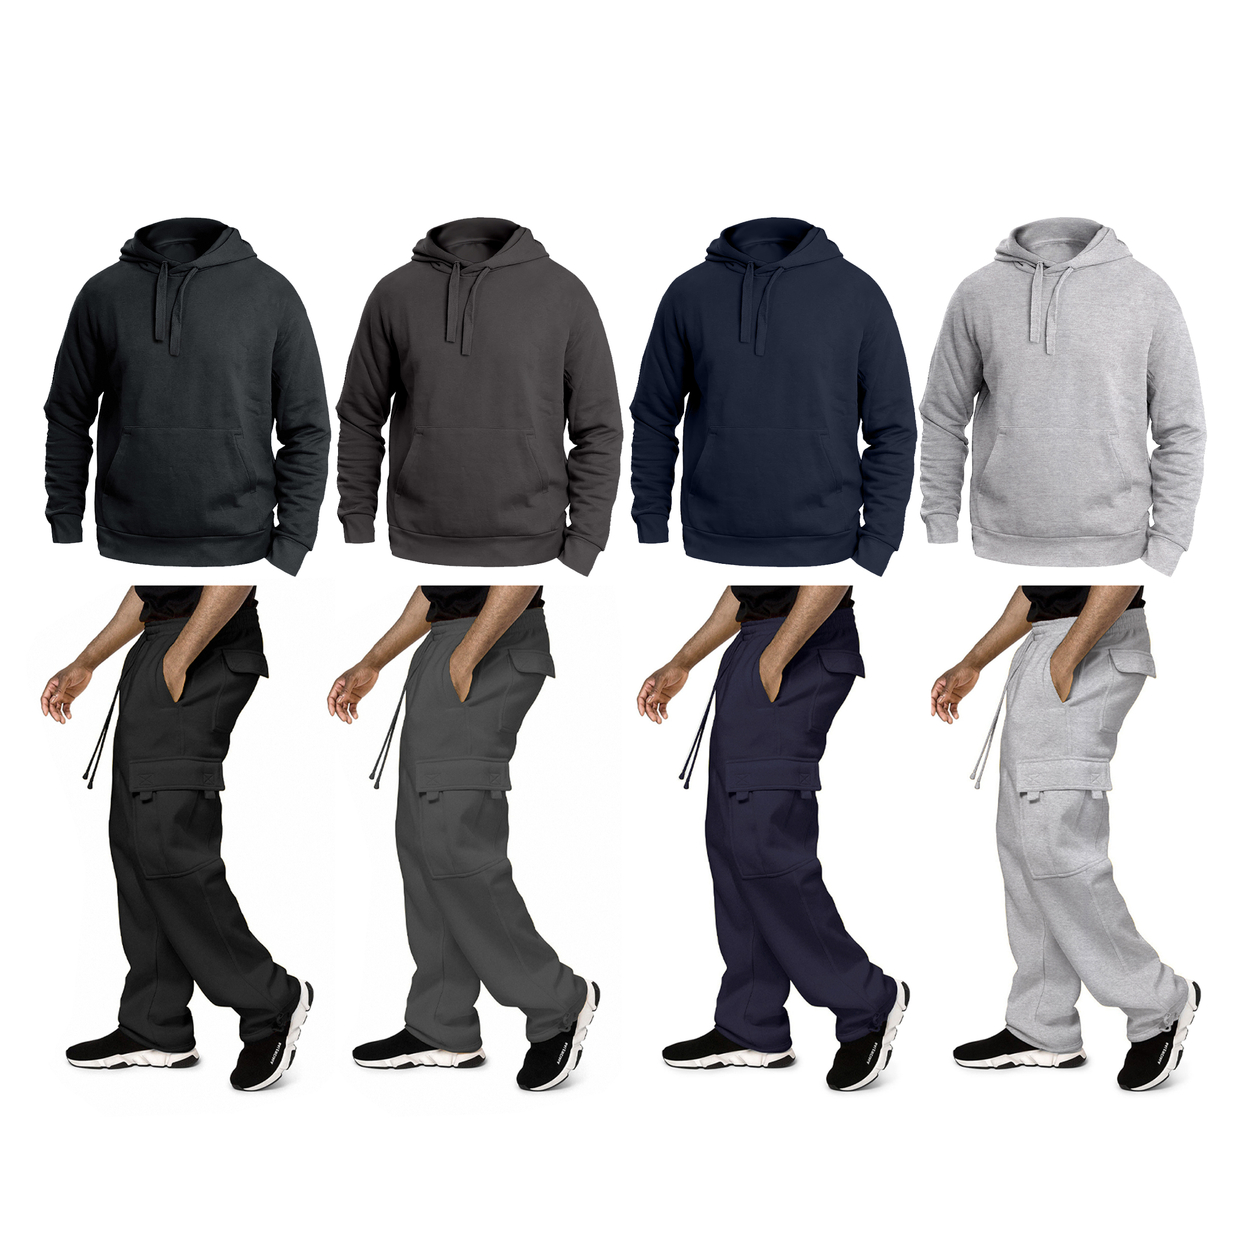 2-Pack: Men's Big & Tall Winter Warm Cozy Athletic Fleece Lined Multi-Pocket Cargo Sweatsuit - Charcoal, Xx-large